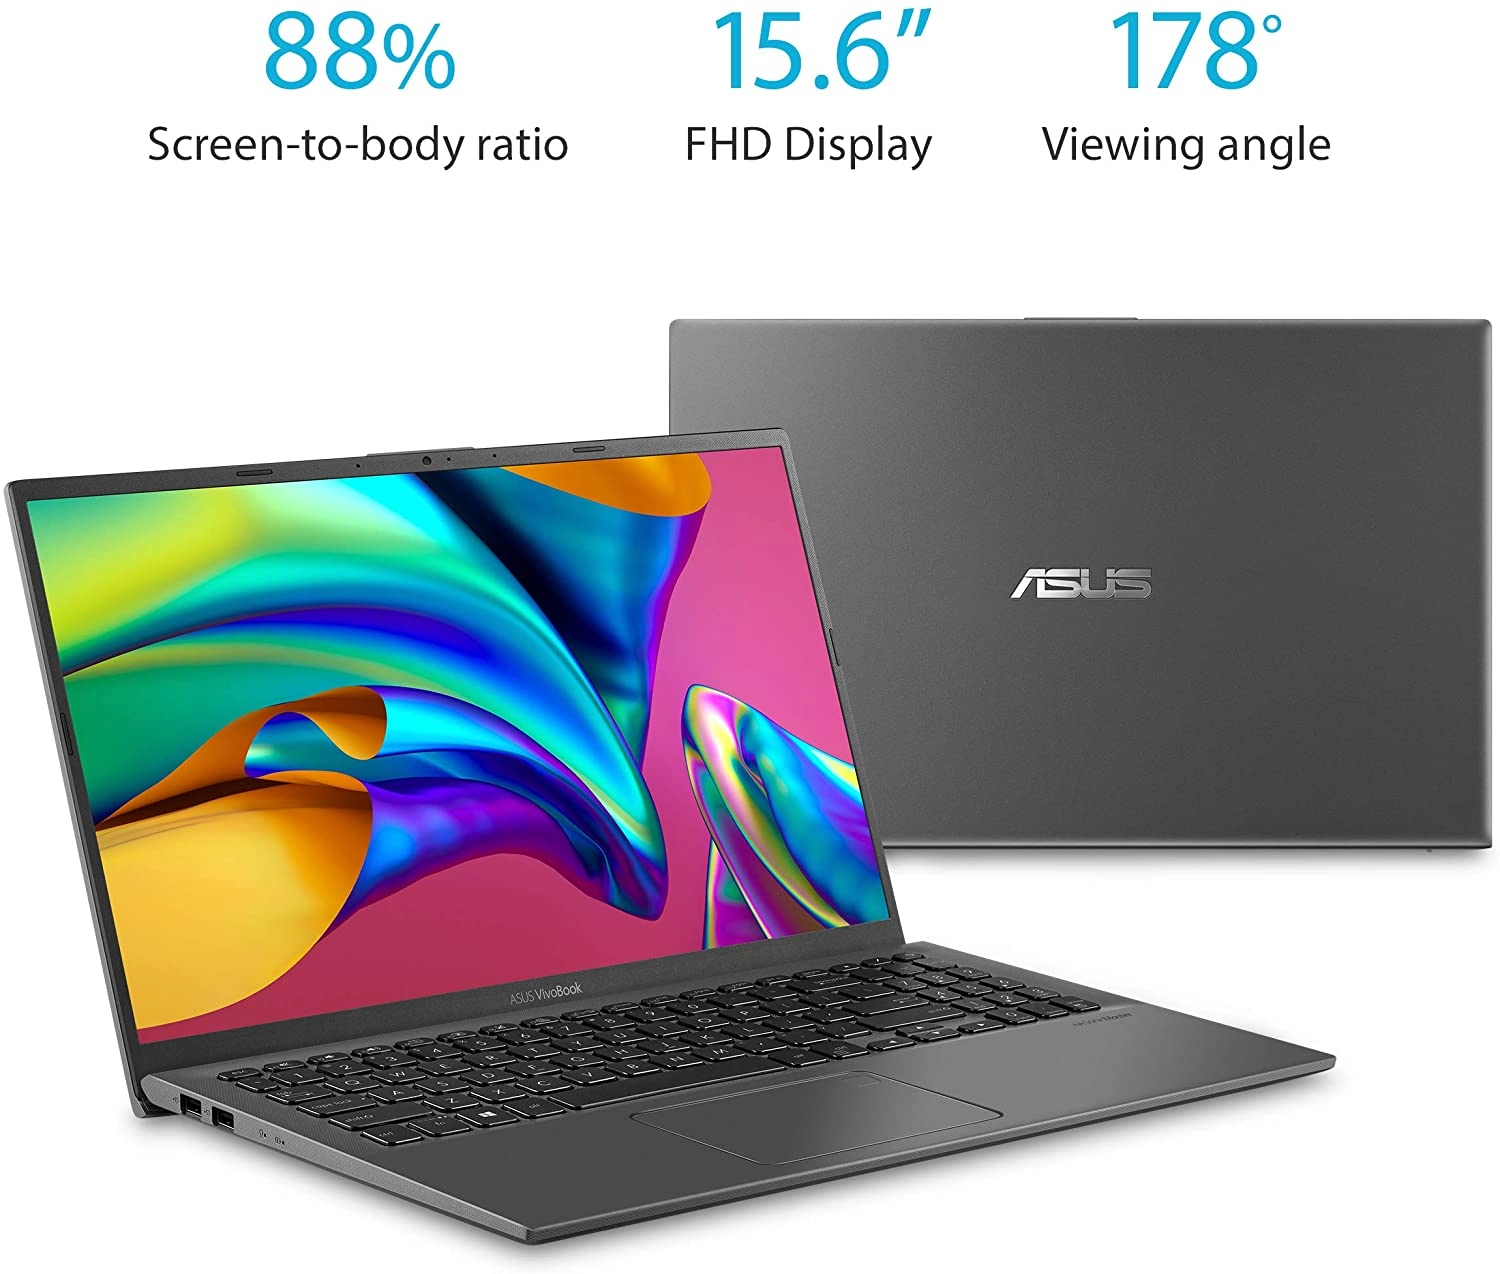 ASUS VivoBook F512DA laptop image